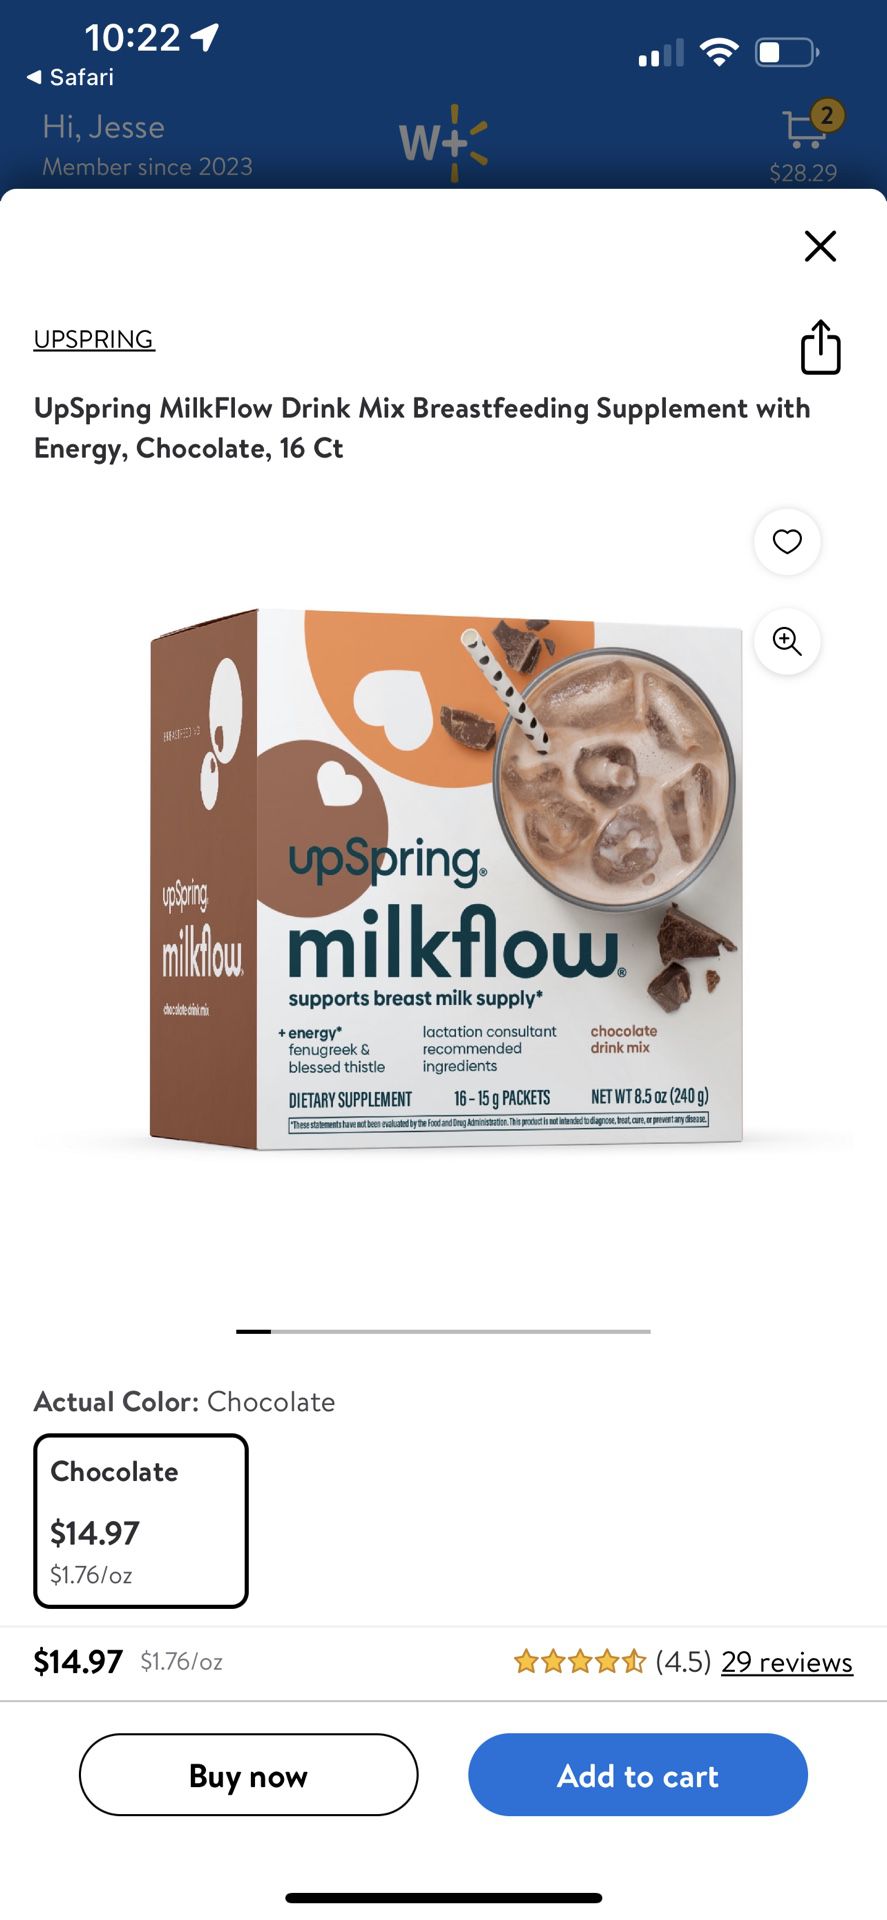 upSpring Milkflow Drink! 